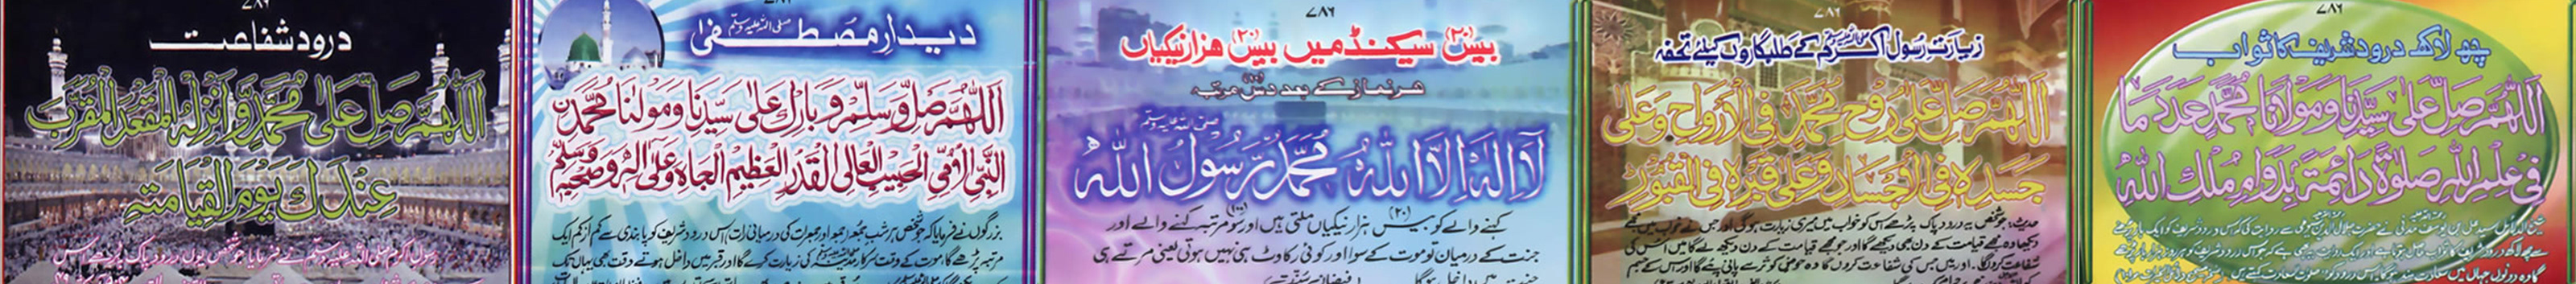 Profil-Banner von Faisal Iqbal vfx